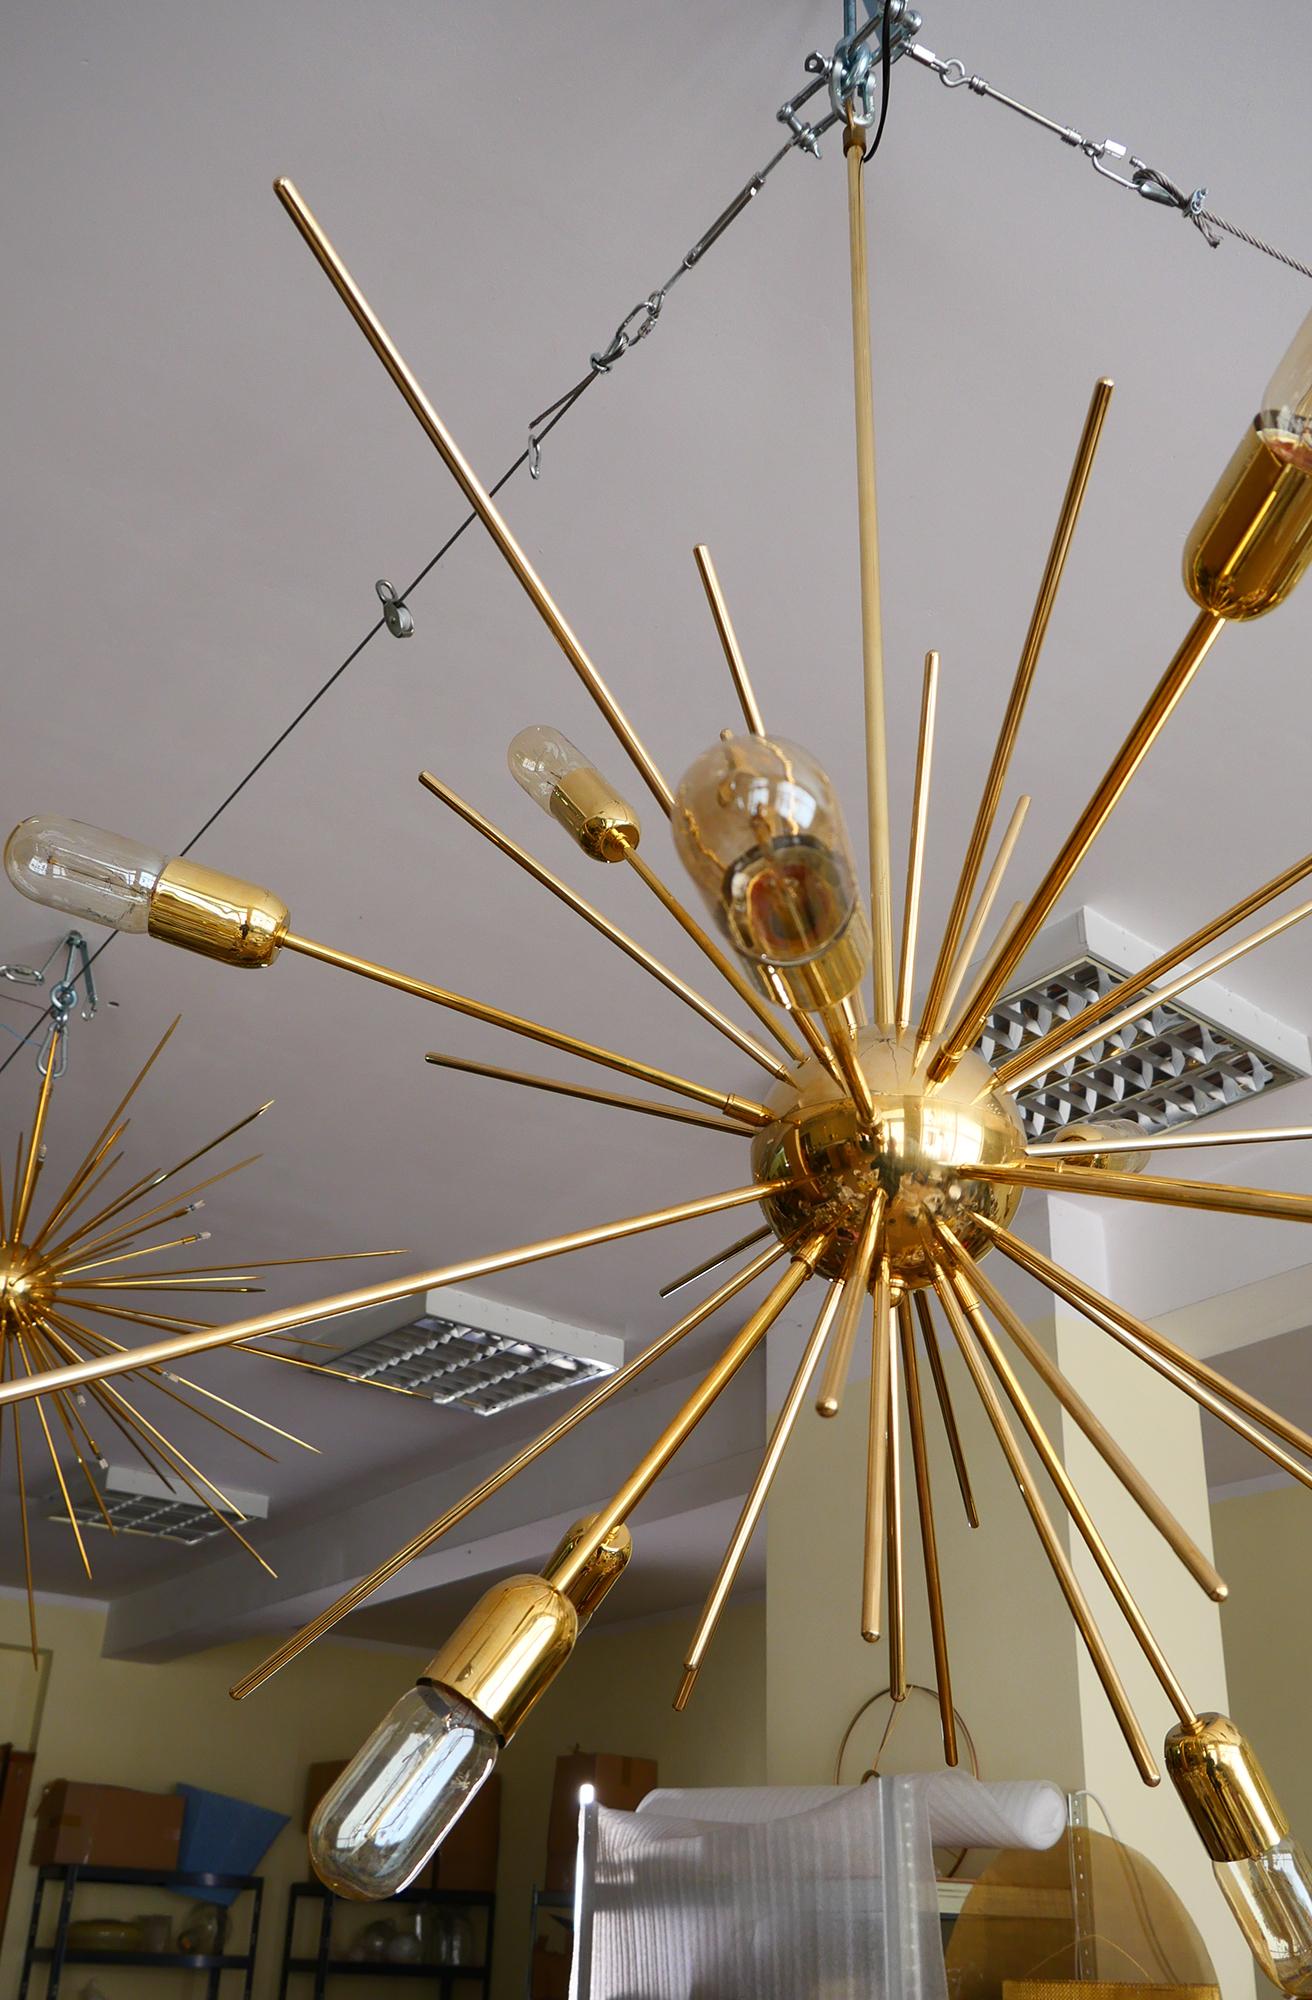 Stardust - impressive solid brass chandelier, Spoutnik style.
Finish - high gloss polished.

Diamater: 90 cm (35